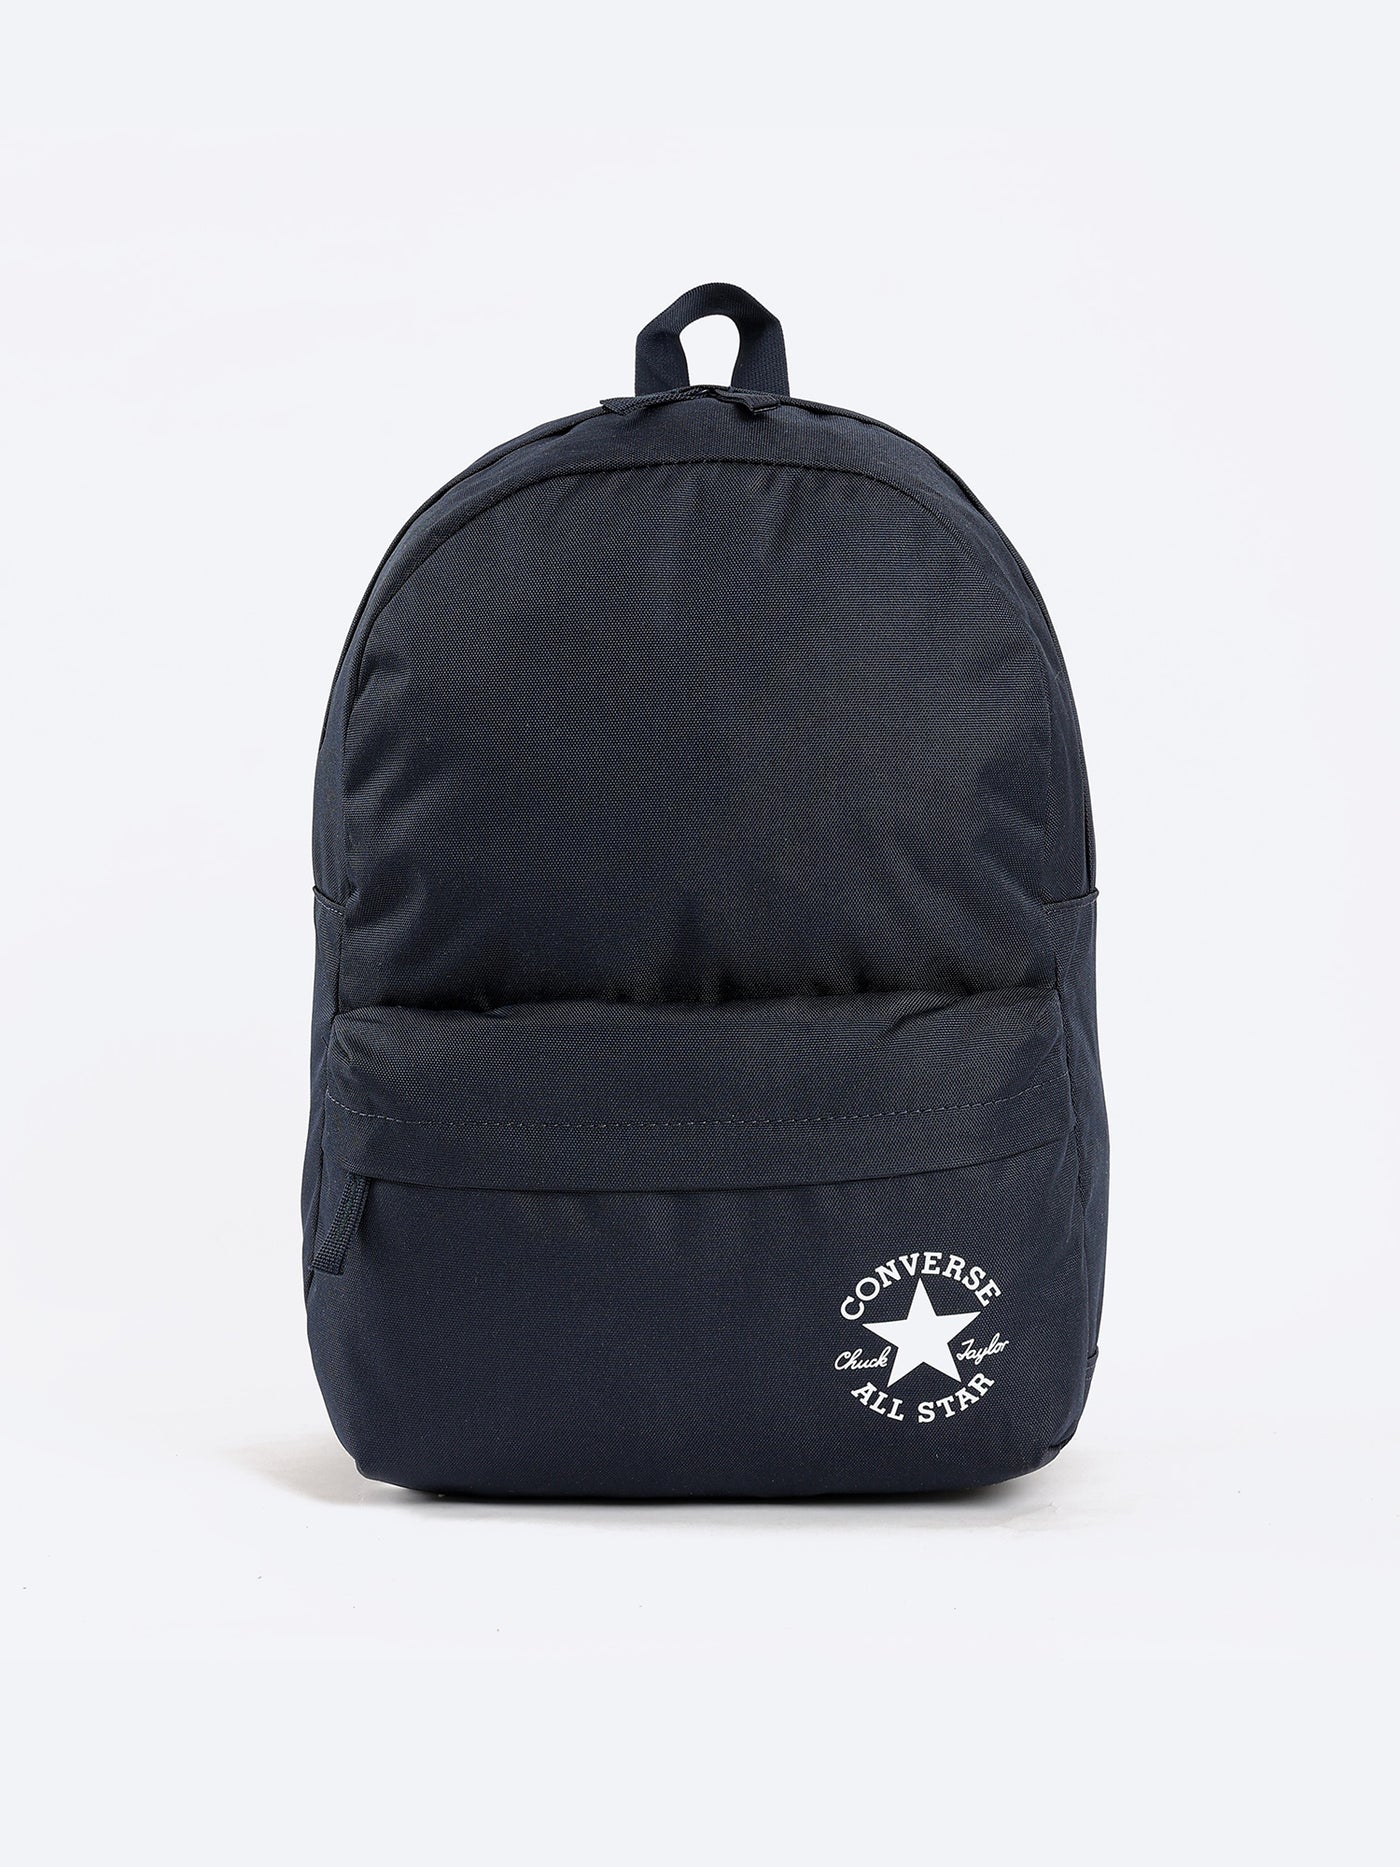 Unisex Backpack - Speed 3 - All Stars